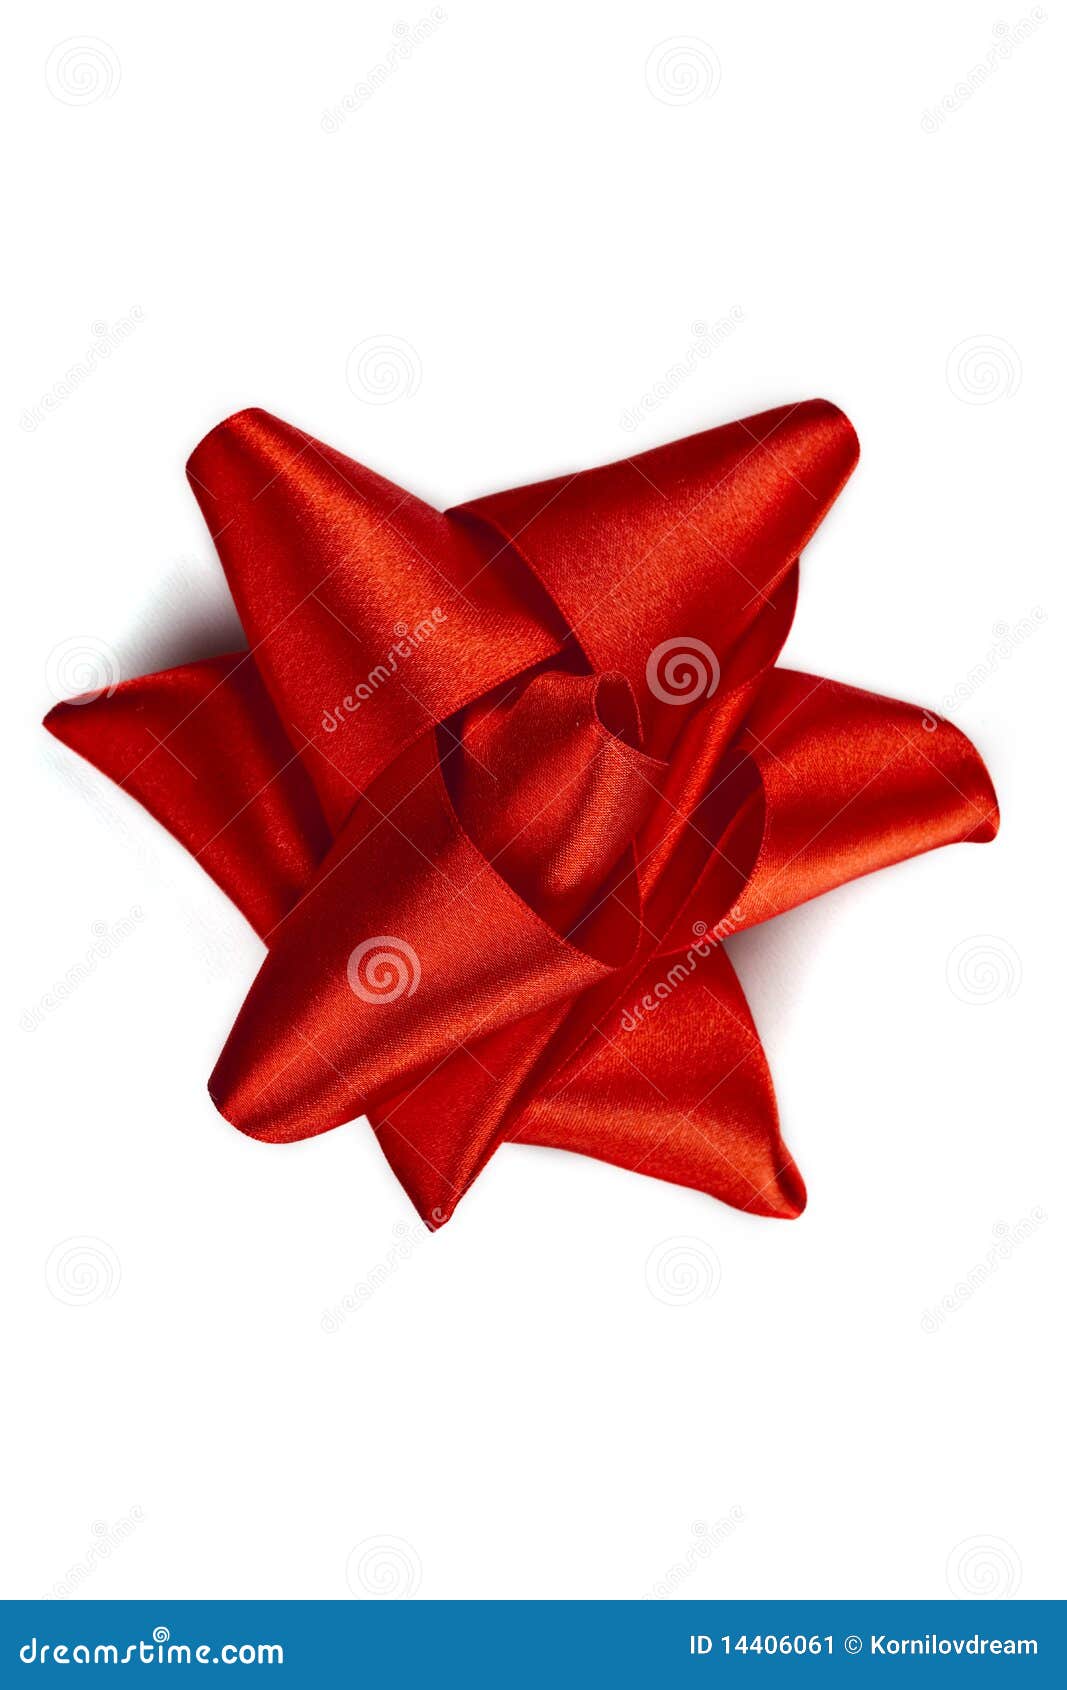 red celebratory bow